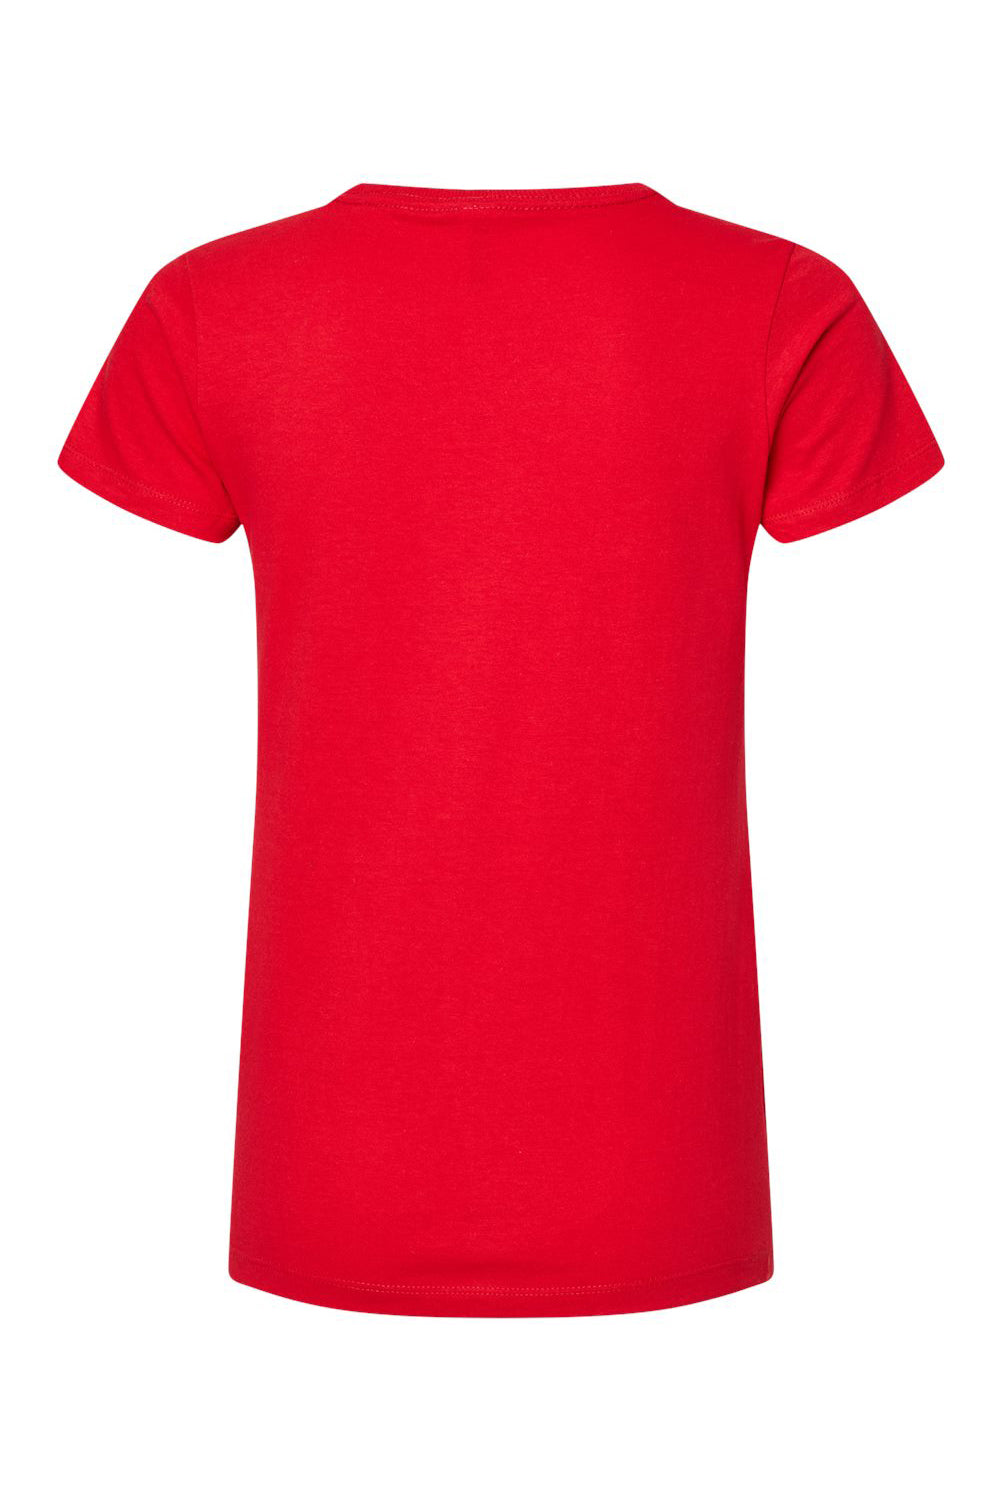 M&O 4810 Womens Gold Soft Touch Short Sleeve Crewneck T-Shirt Deep Red Flat Back